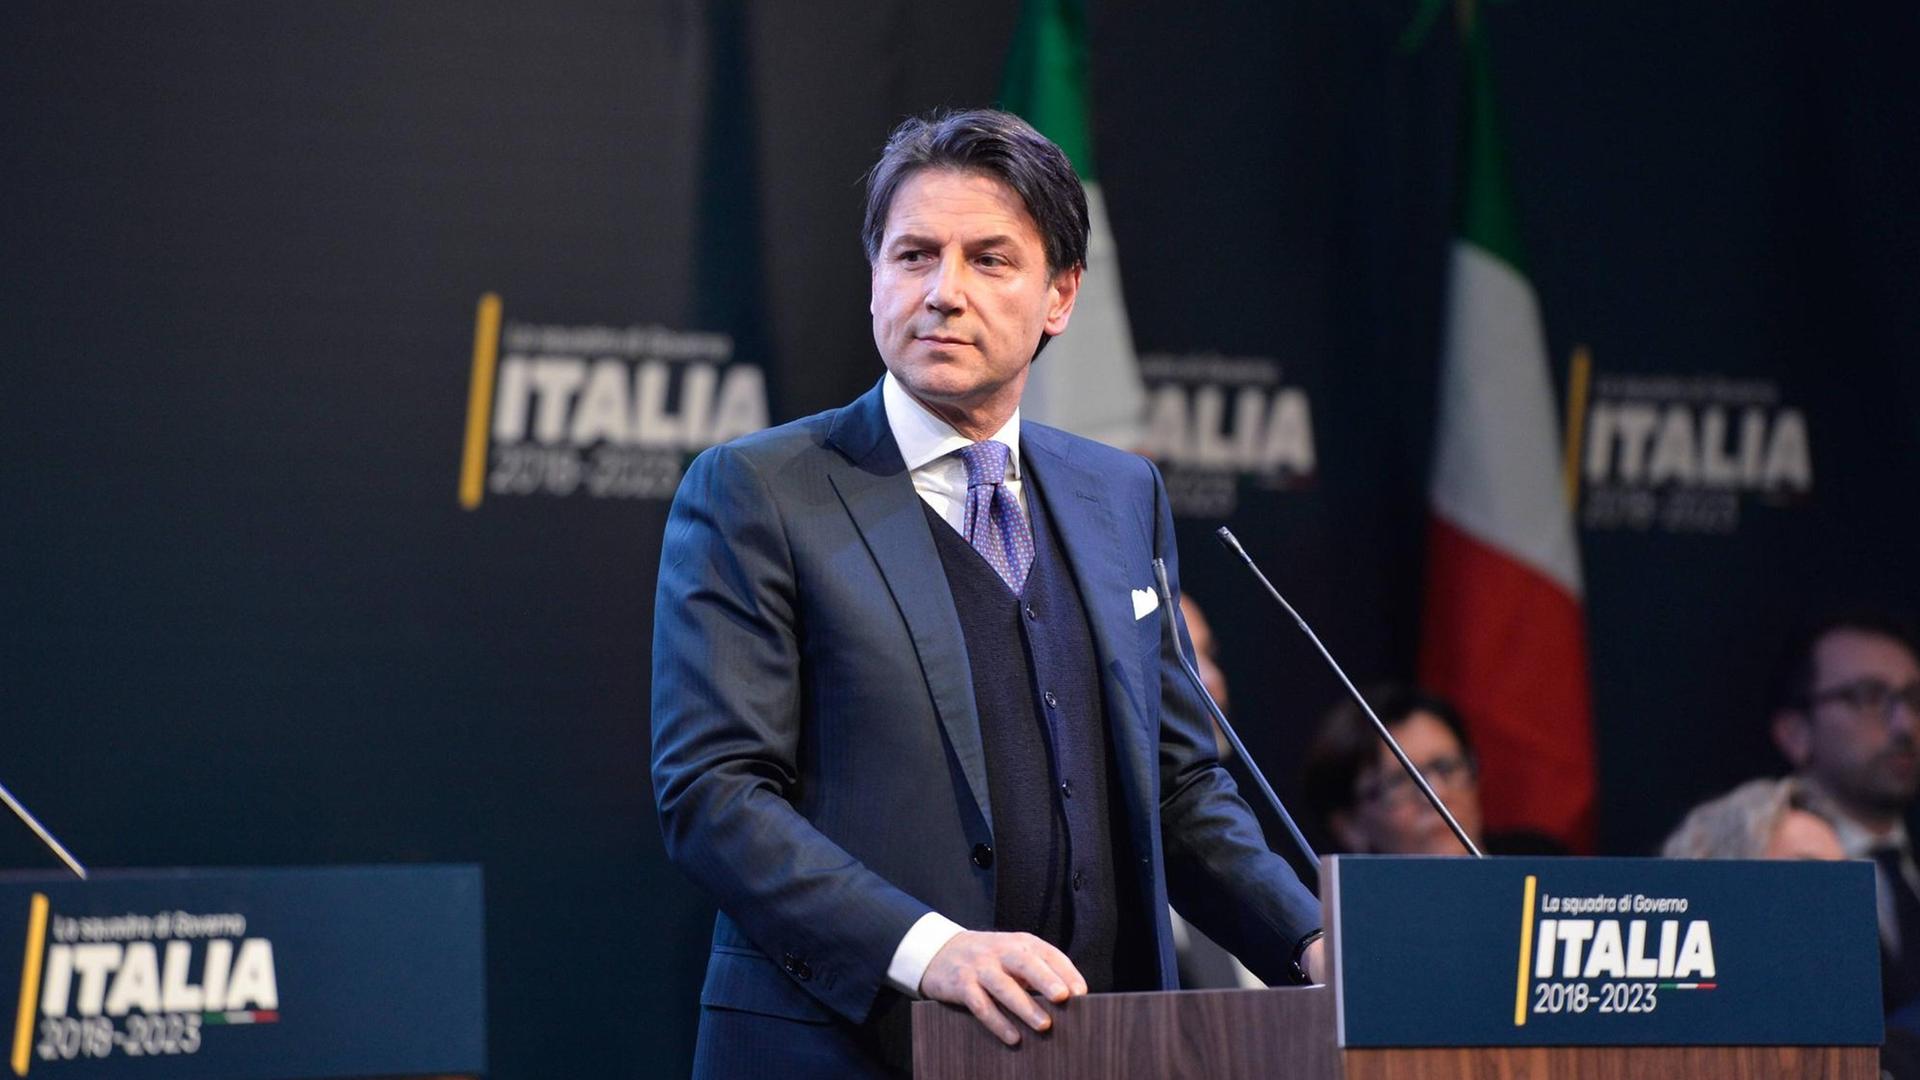 Der Juraprofessor Giuseppe Conte soll Ministerpräsident Italiens werden